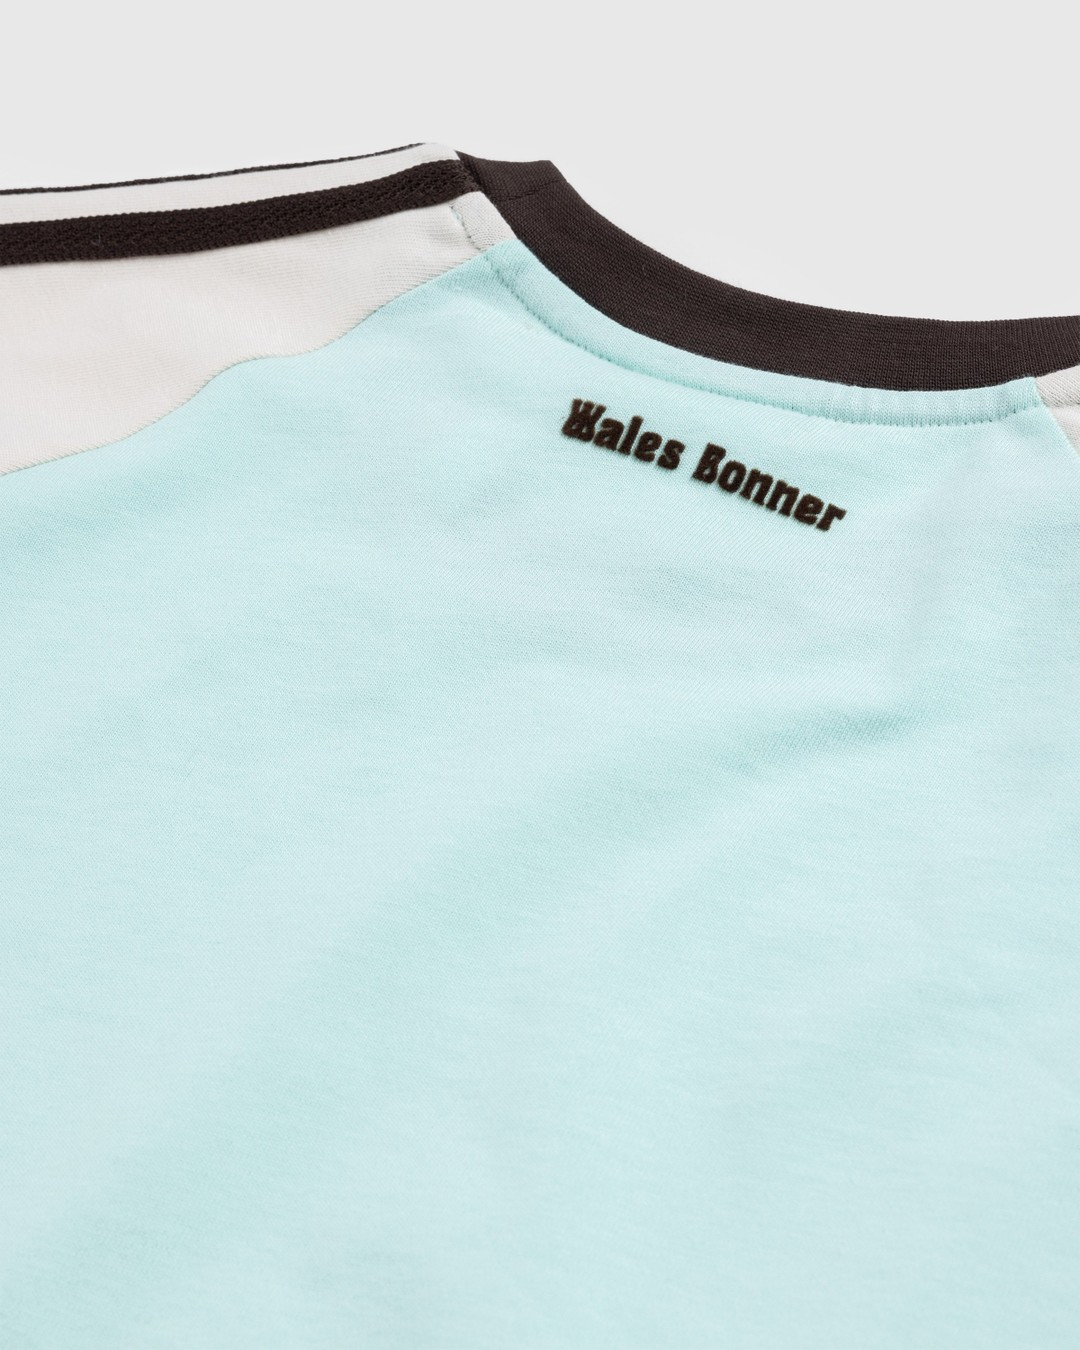 Adidas x Wales Bonner – Organic Cotton Tee Clear Mint - T-shirts - Green - Image 5